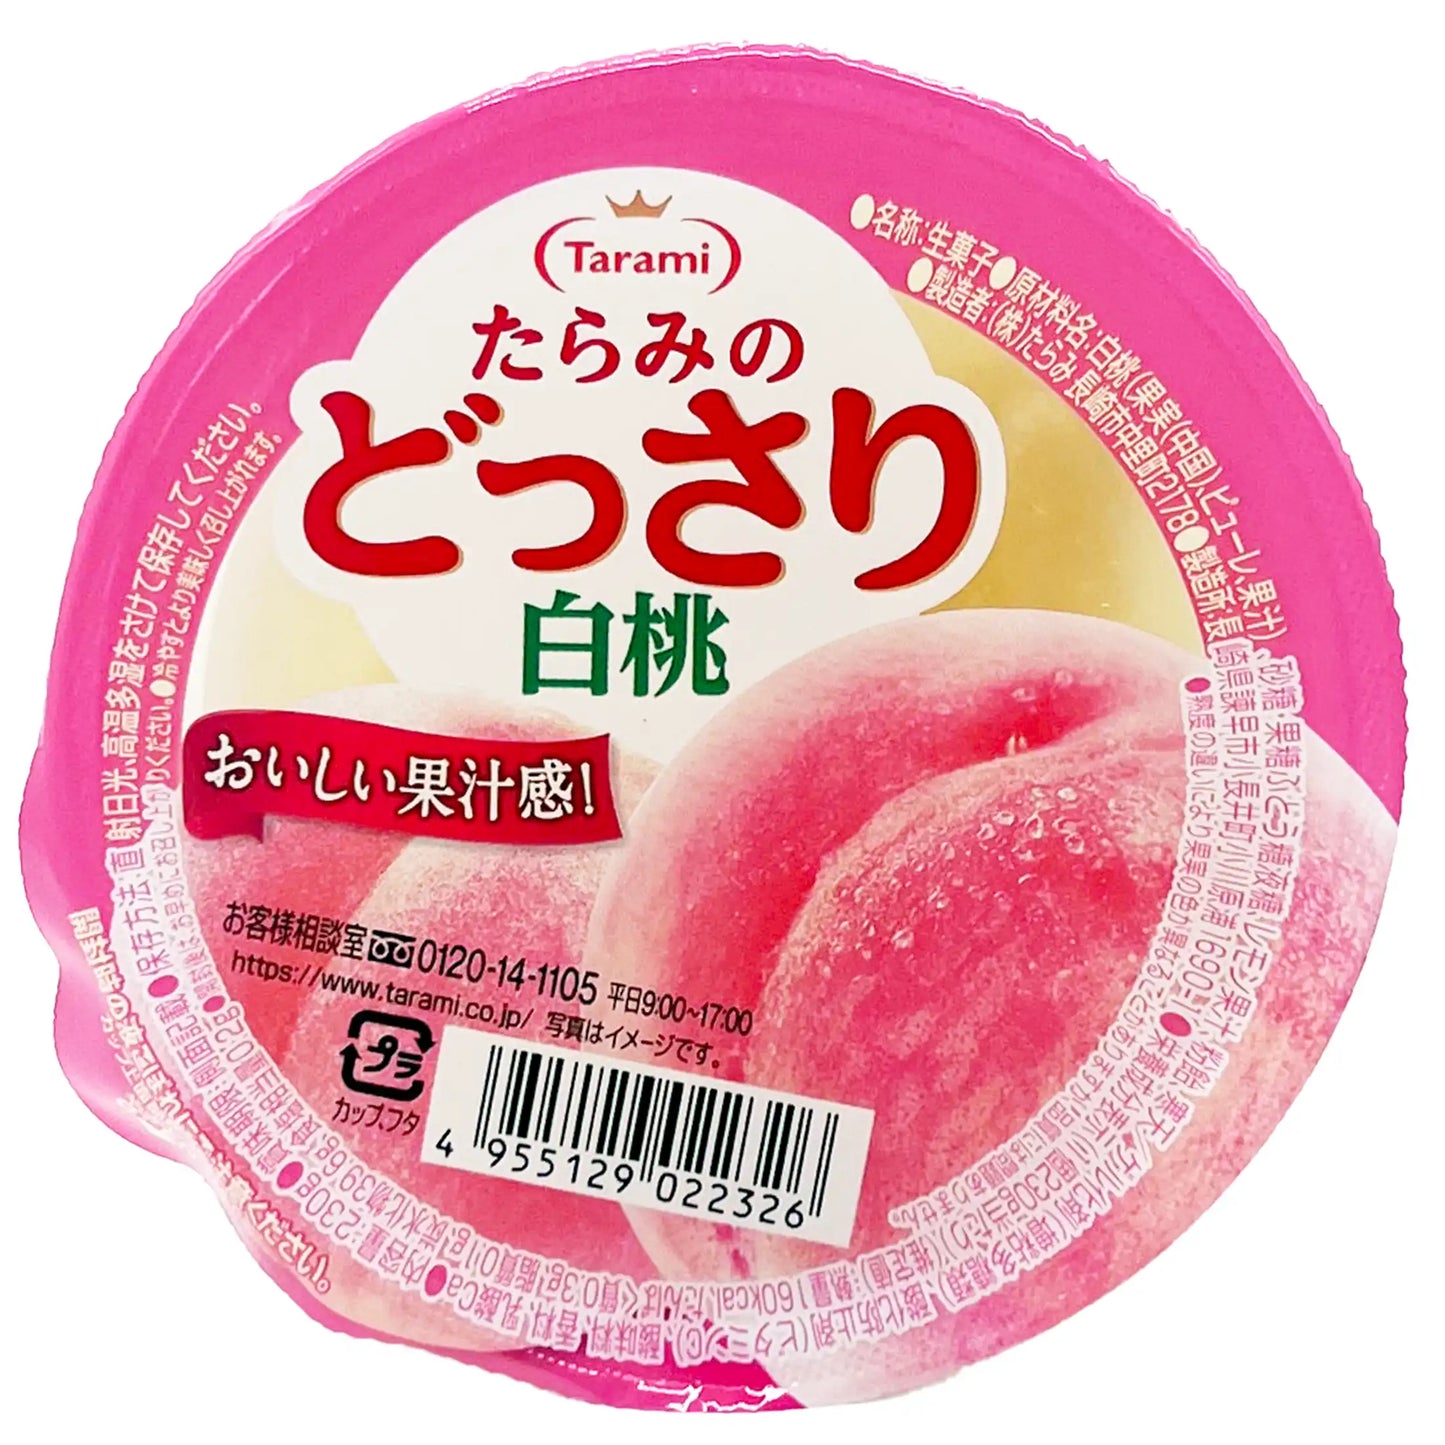 Tarami Dossari Jelly Cup White Peach 8.11 oz